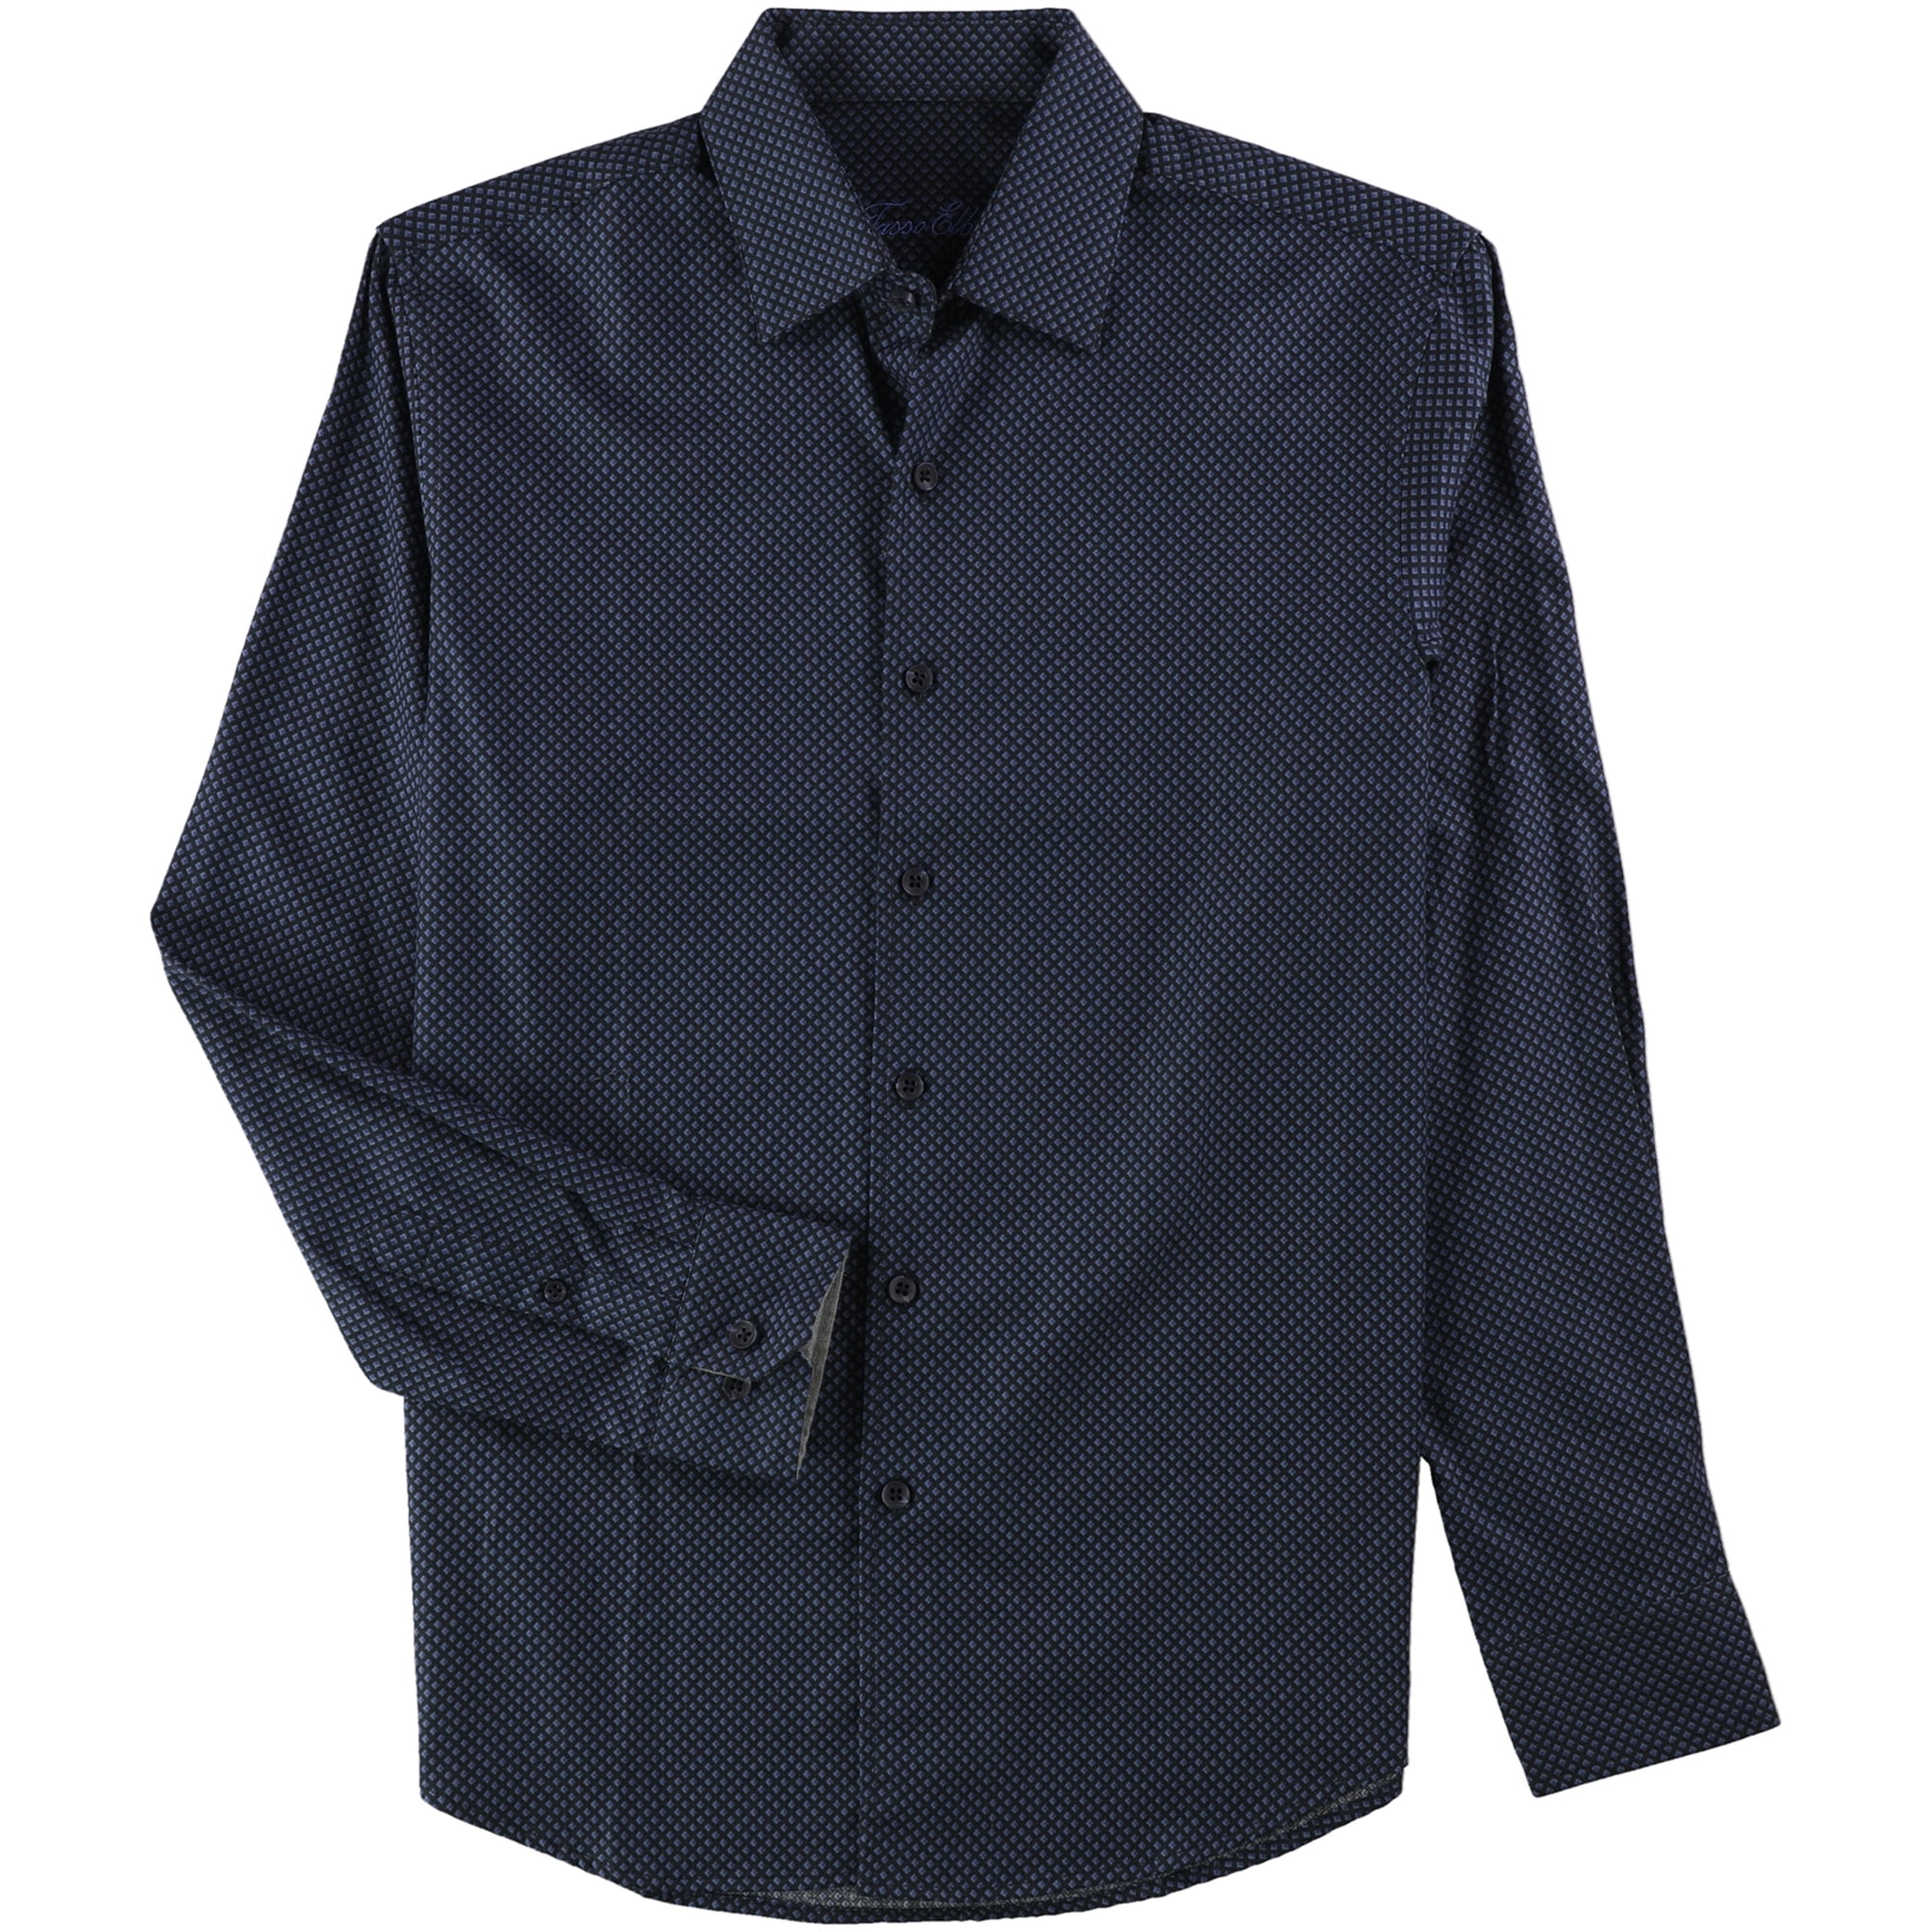 Tasso Elba Mens Debala Plaid Button Up Shirt